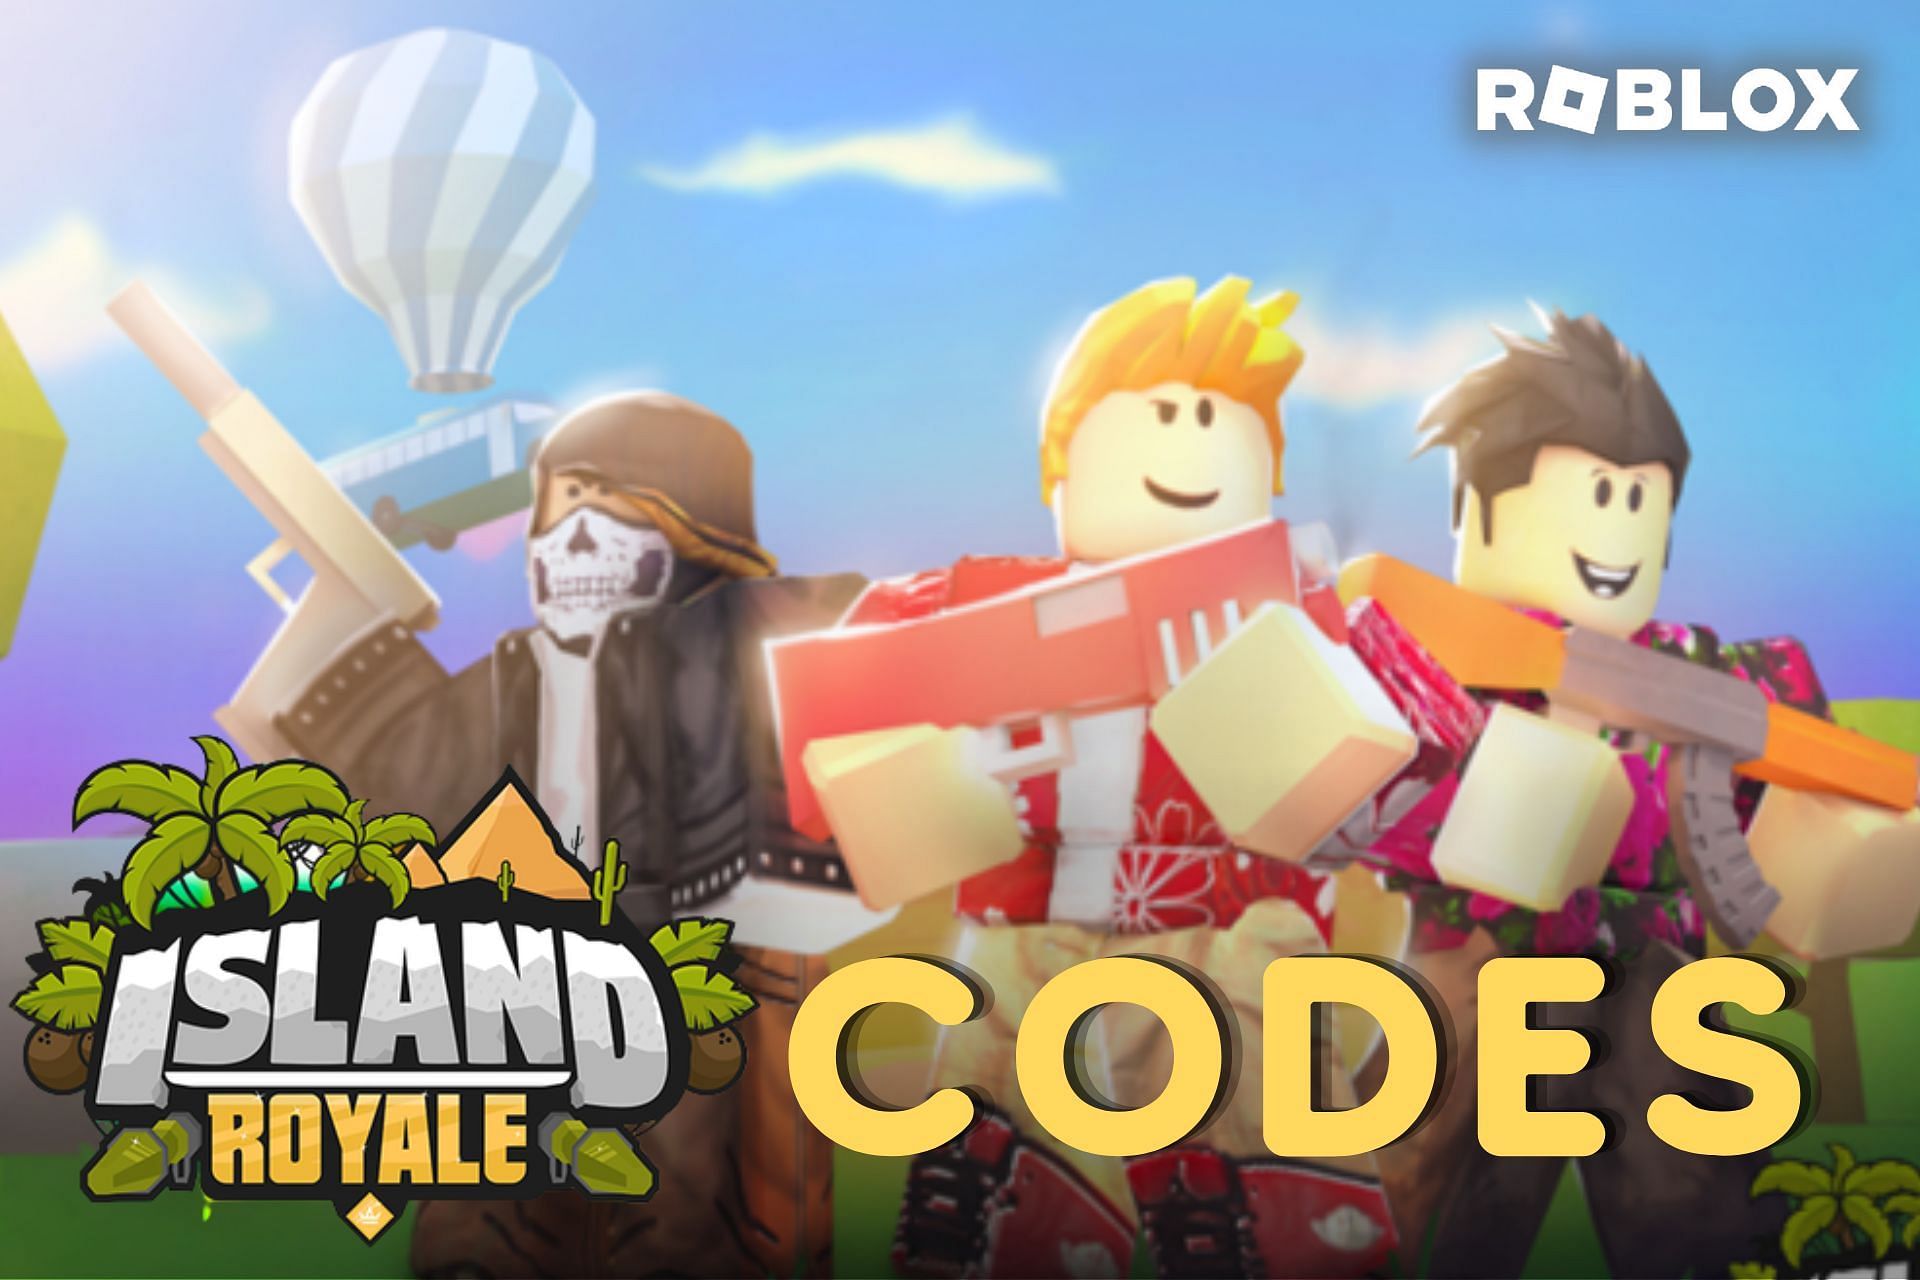 Roblox Island Royale codes (December 2022) Free Bucks